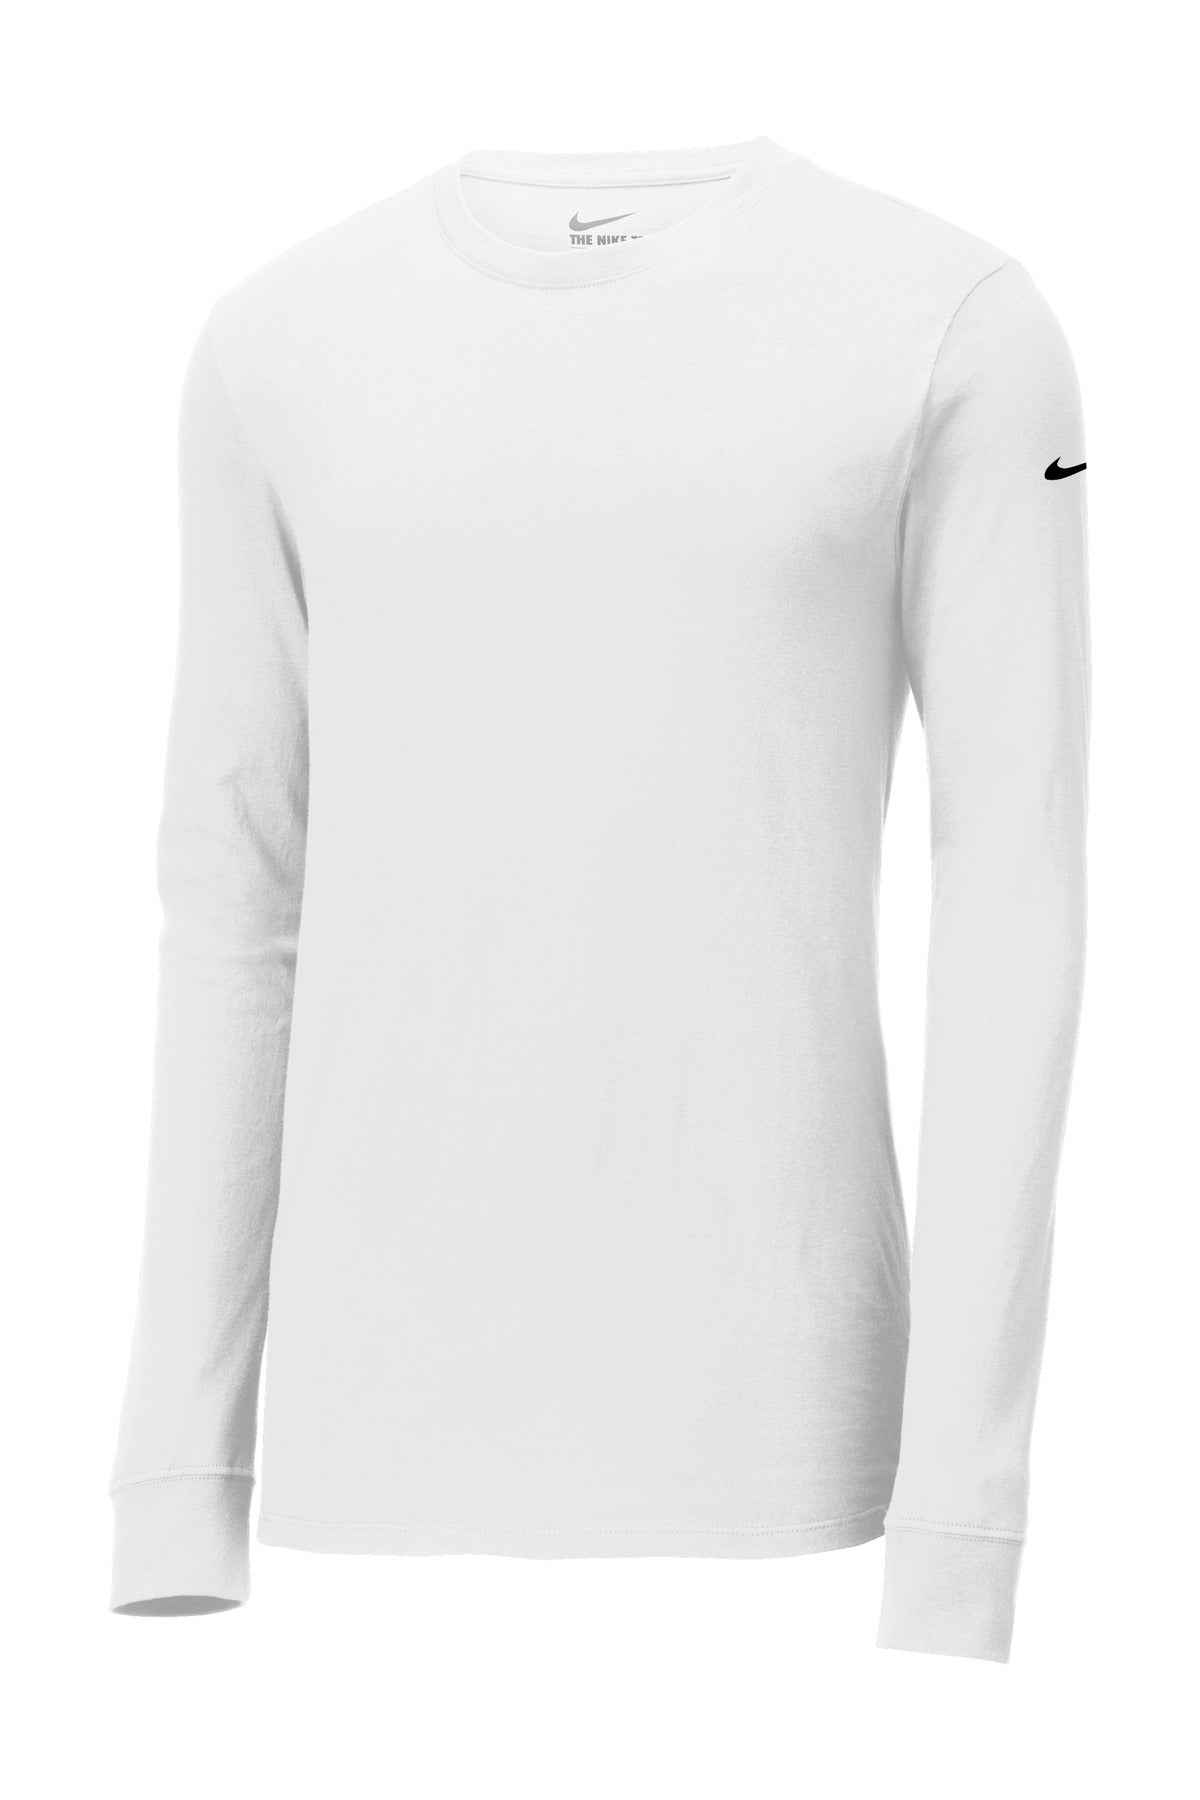 Nike Core Cotton Long Sleeve Tee. NKBQ5232 - BT Imprintables Shirts